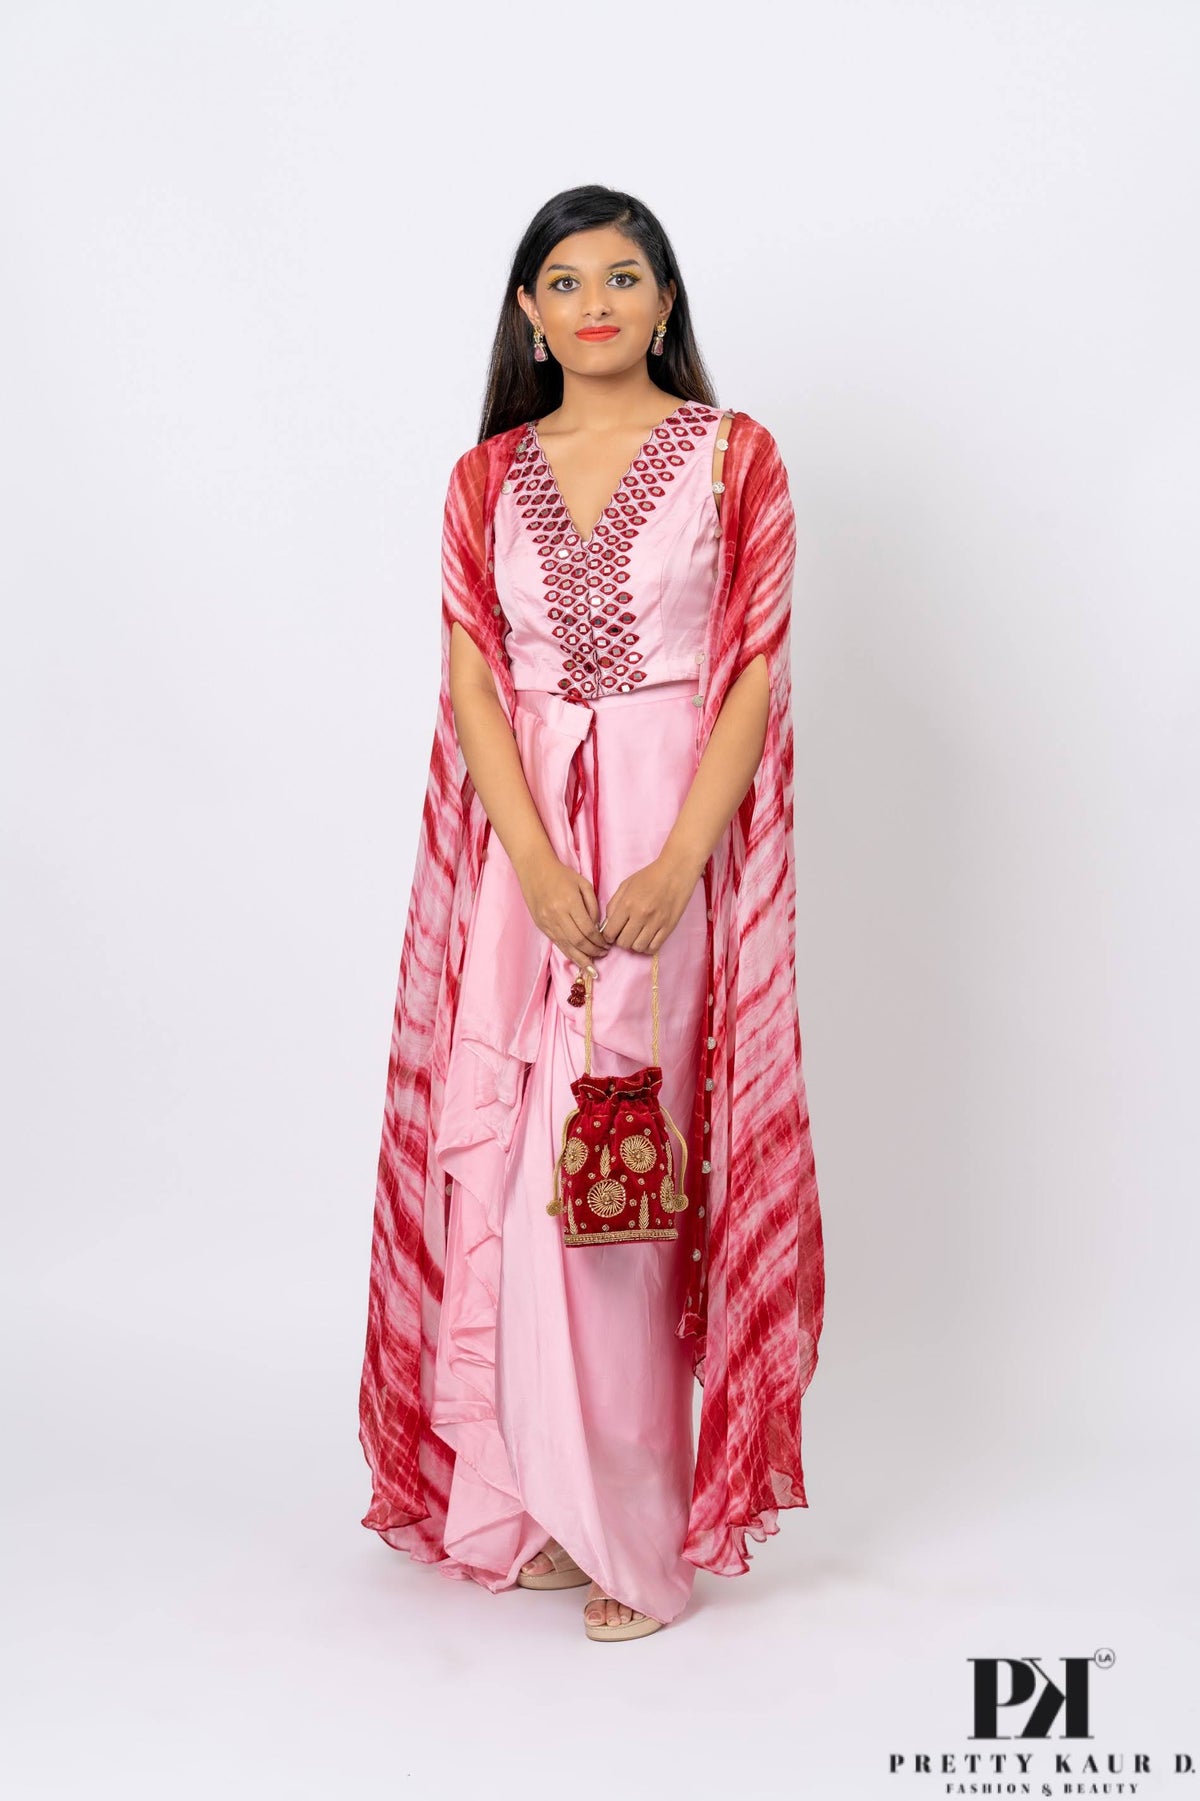 Pretty-Kaur-fashion-beauty-Stylish-Party-Wear-Indian-Dhoti-Dress-1